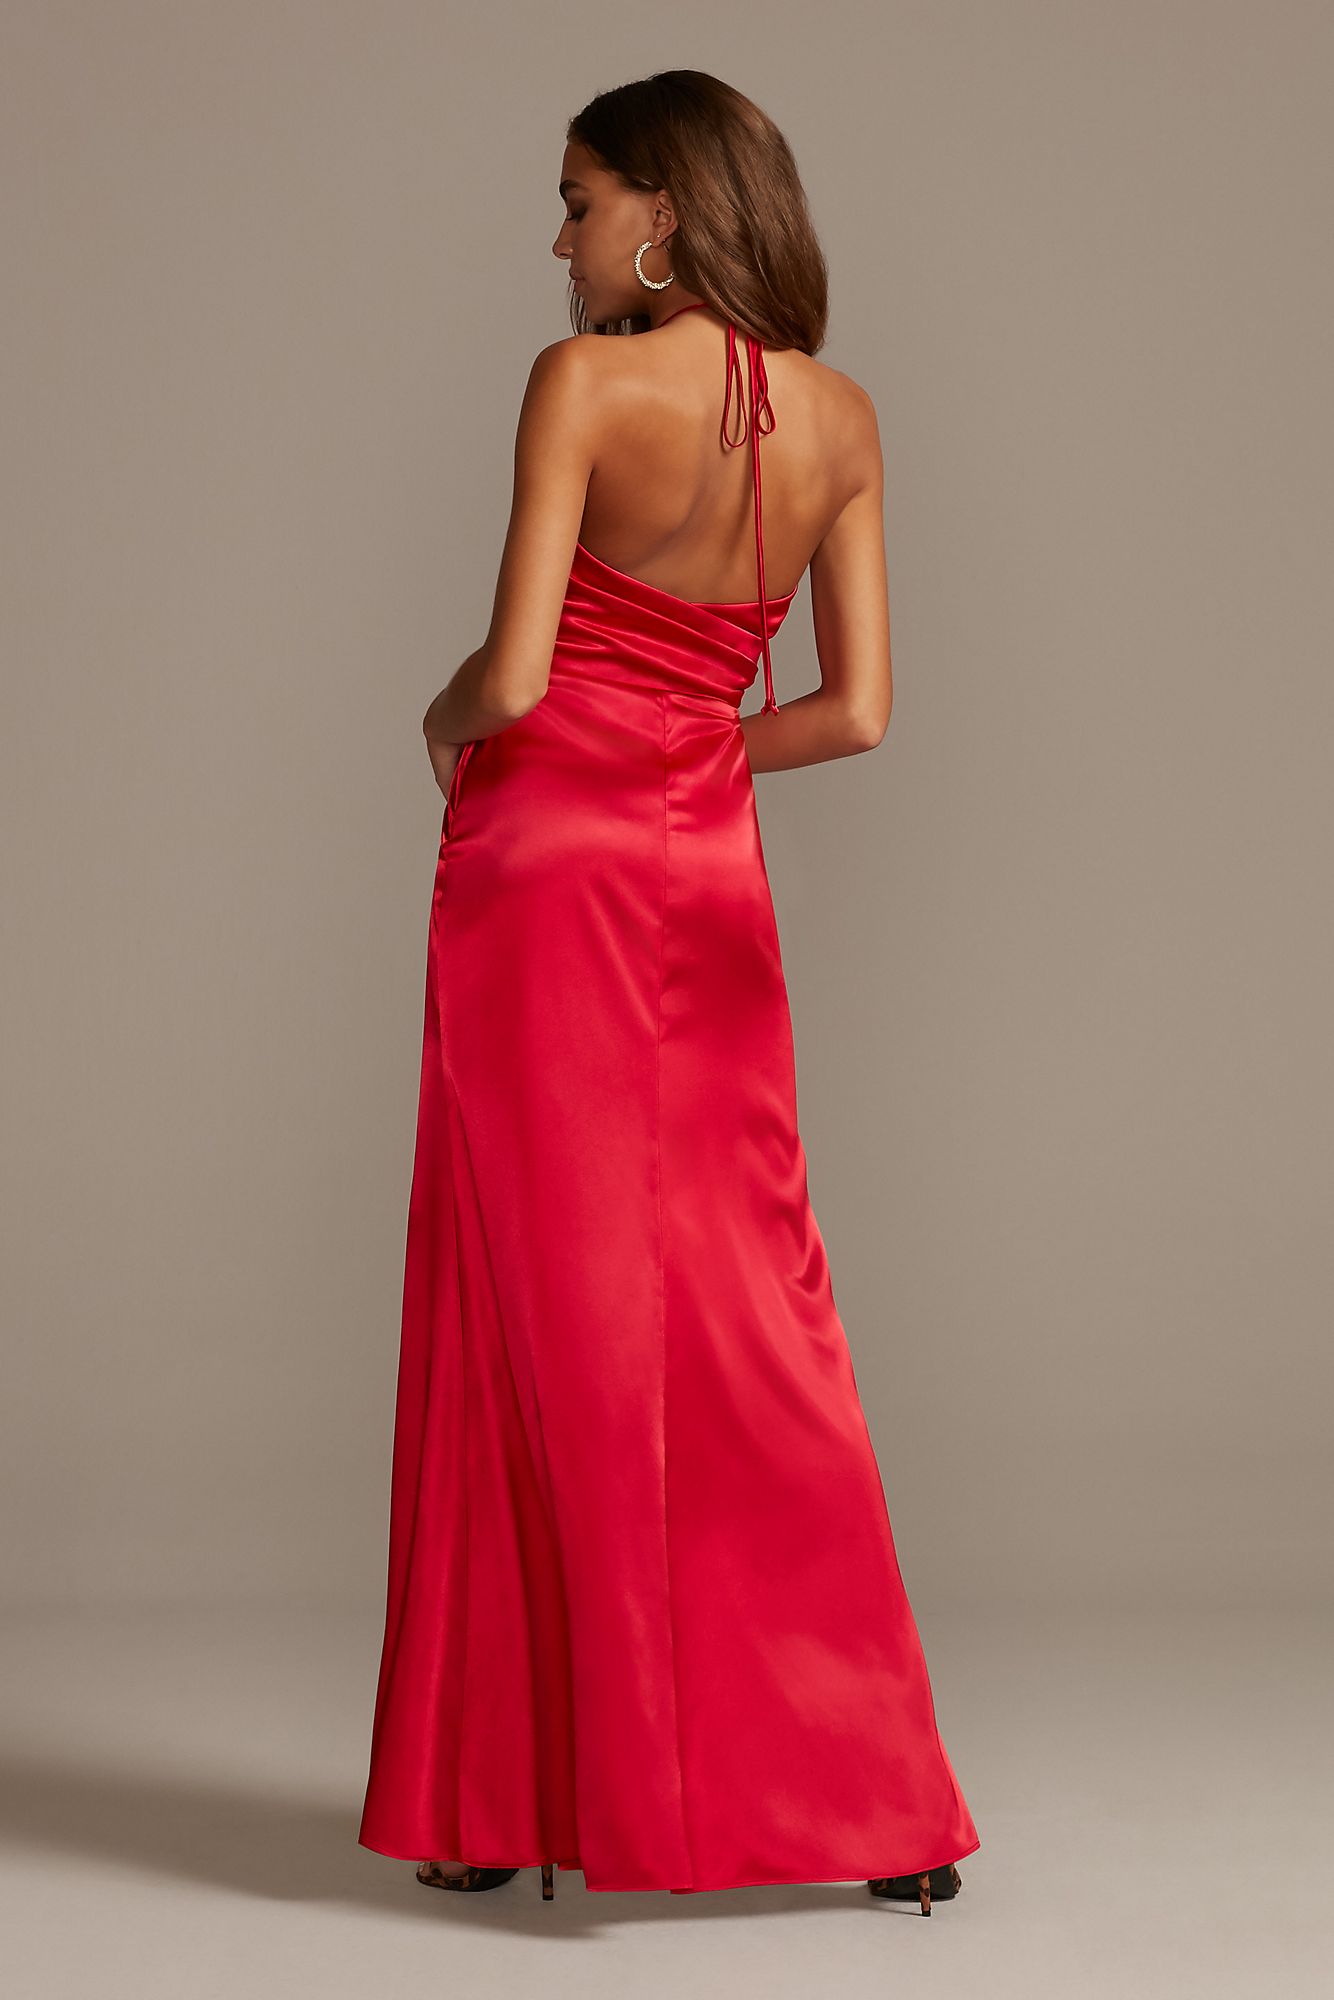 Wrap Halter Long Satin Dress with Skirt Slit Style 12765D